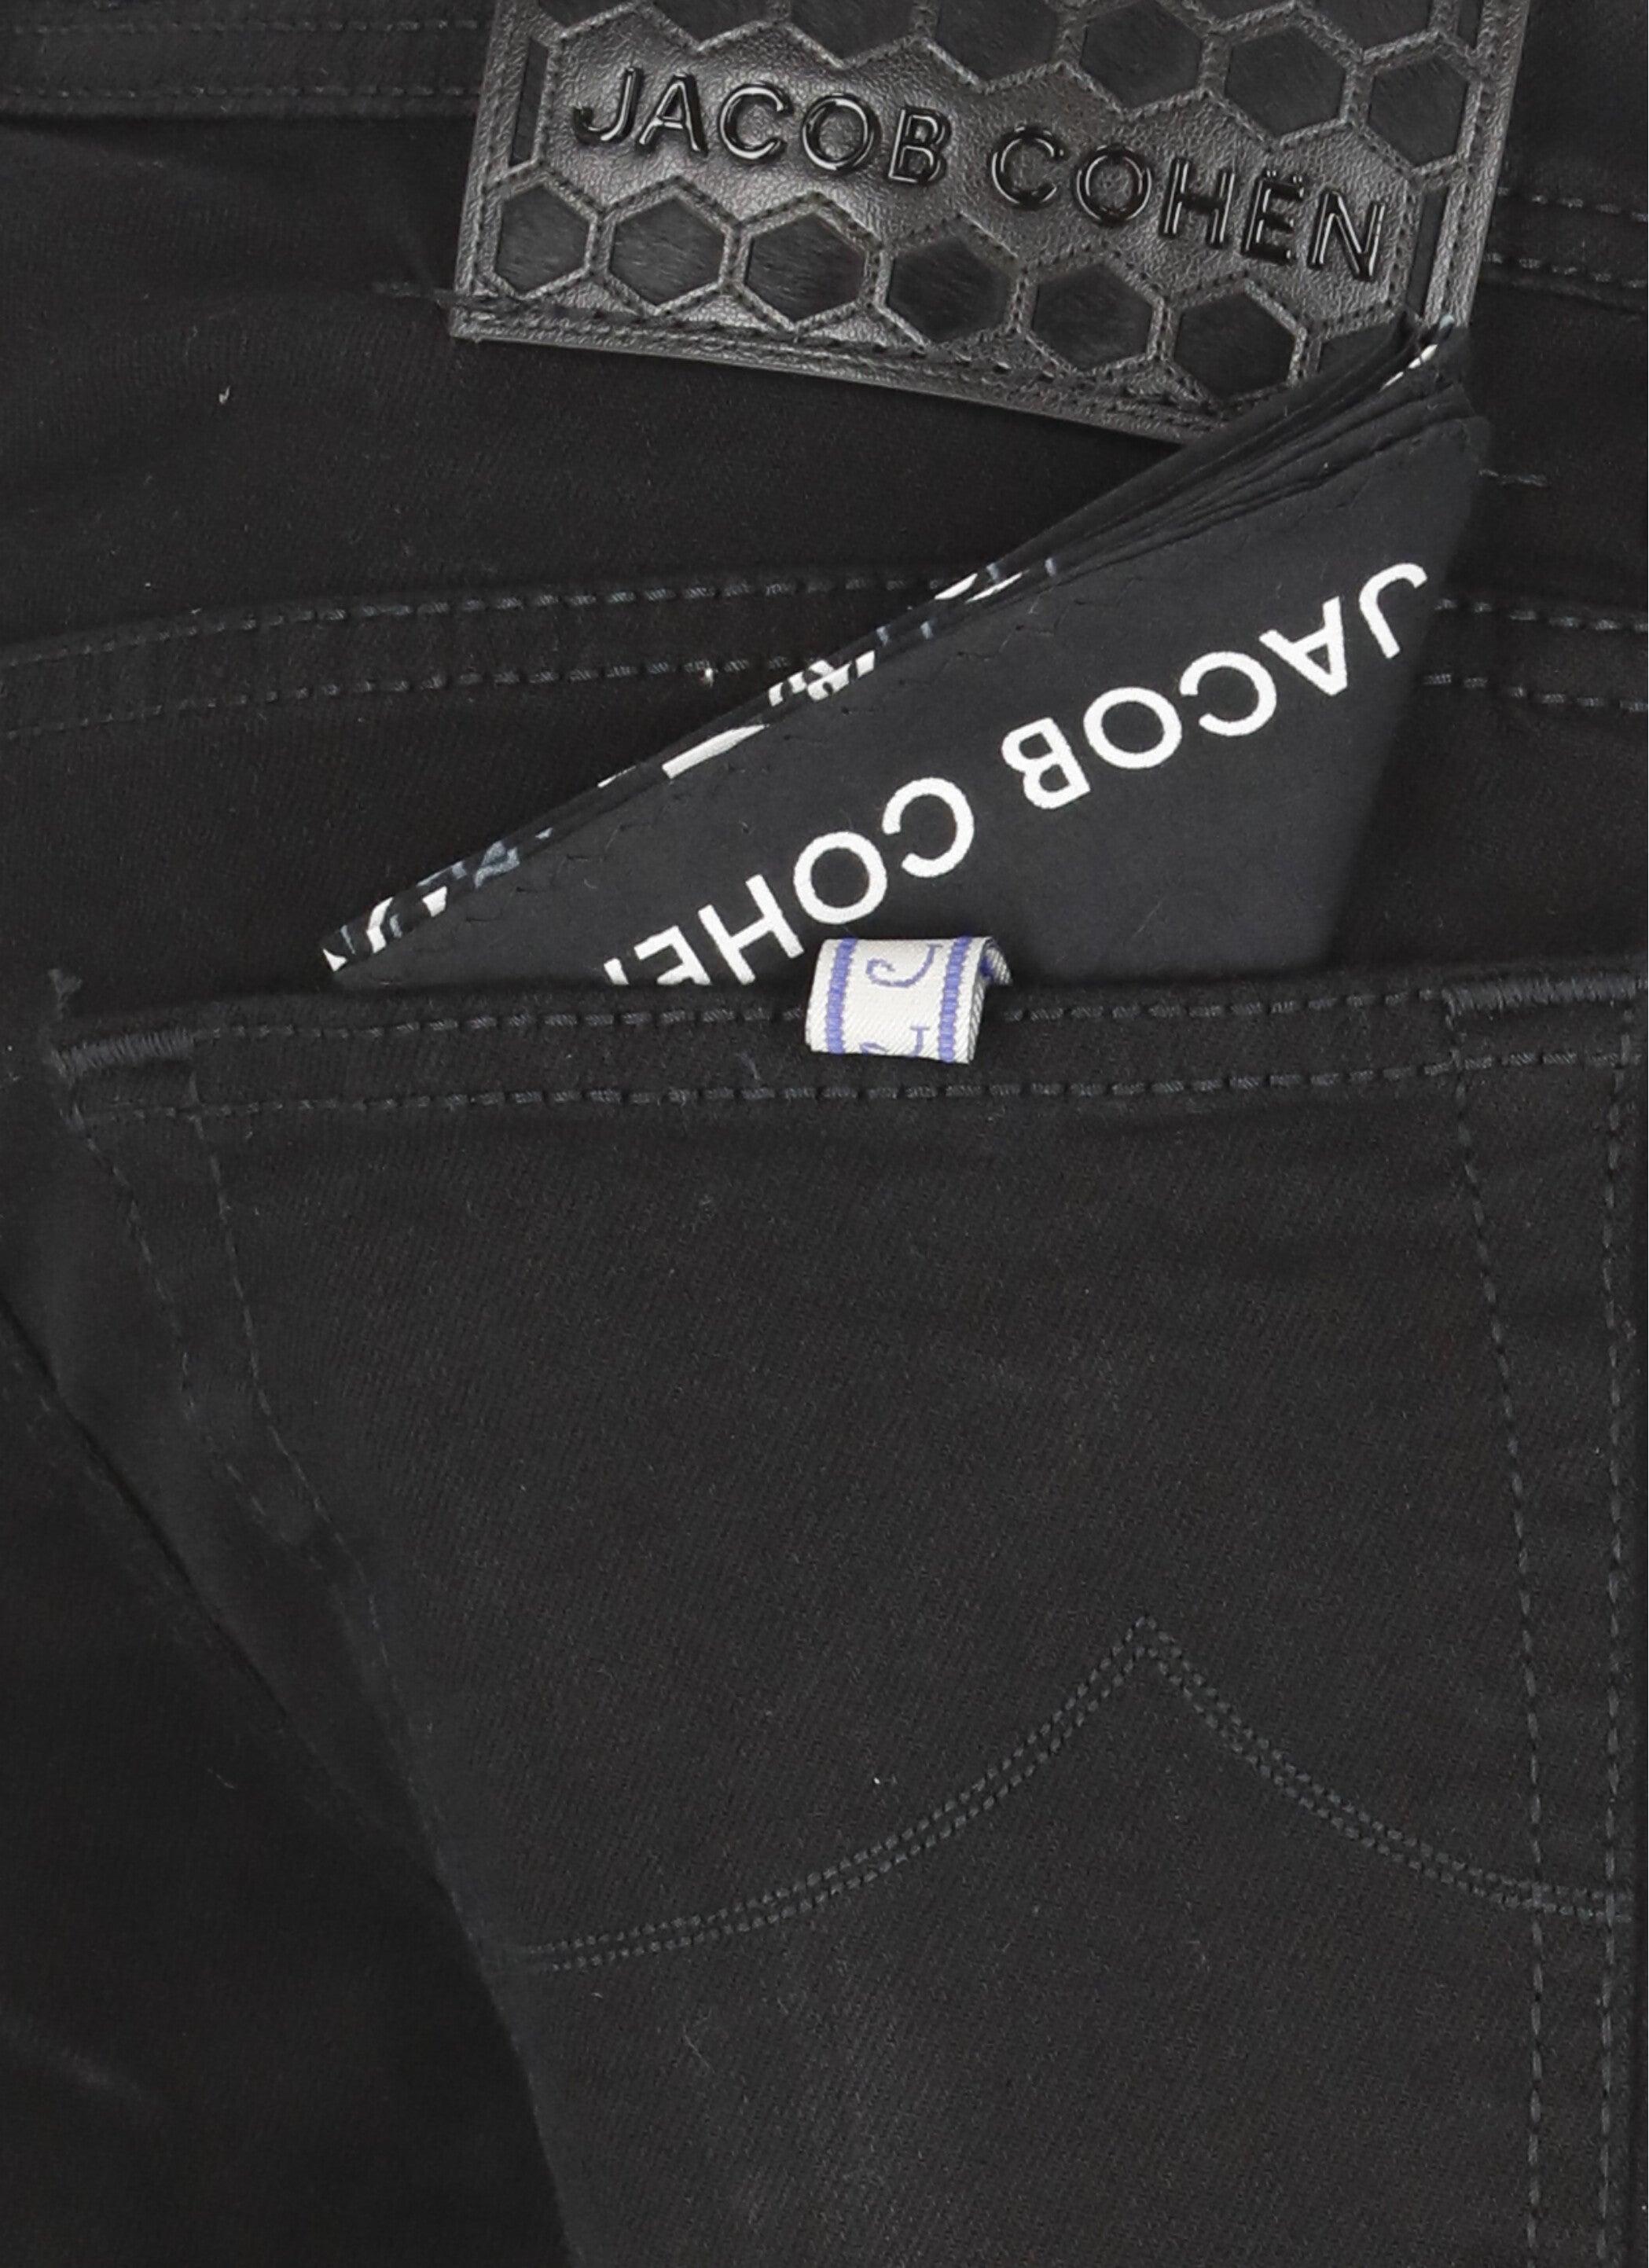 $525 Jacob Cohën Dark Charcoal Gray Solid Jeans BK Slim 